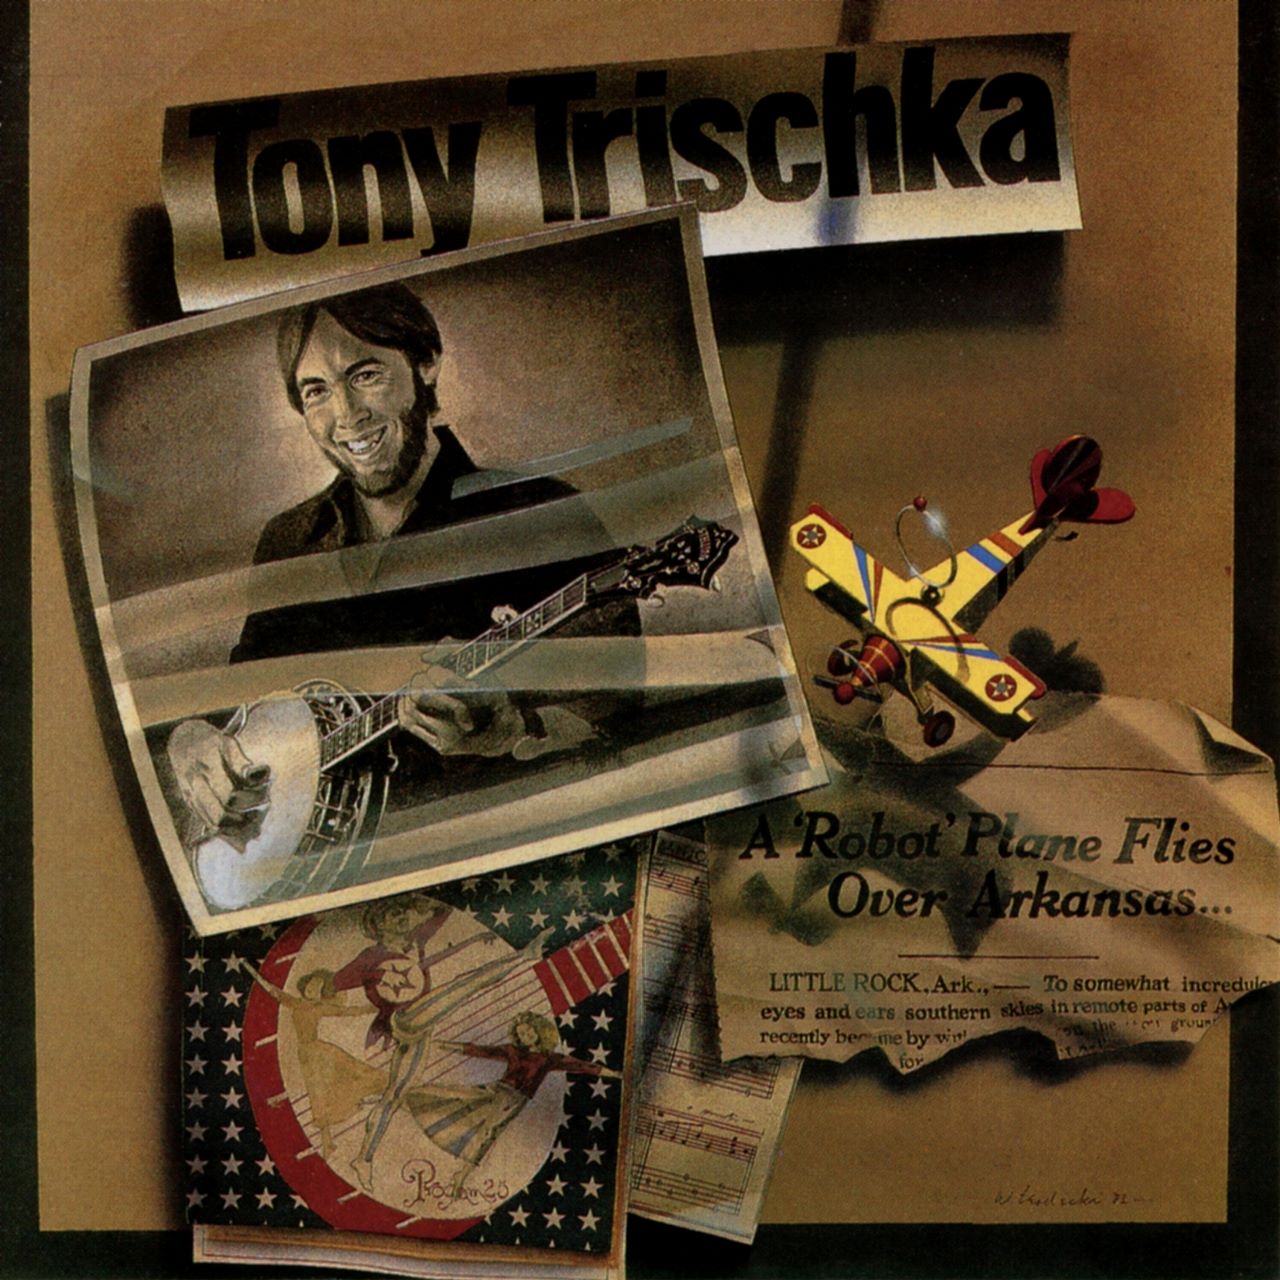 Tony Trischka - A Robot Plane Flies Over Arkansas cover album